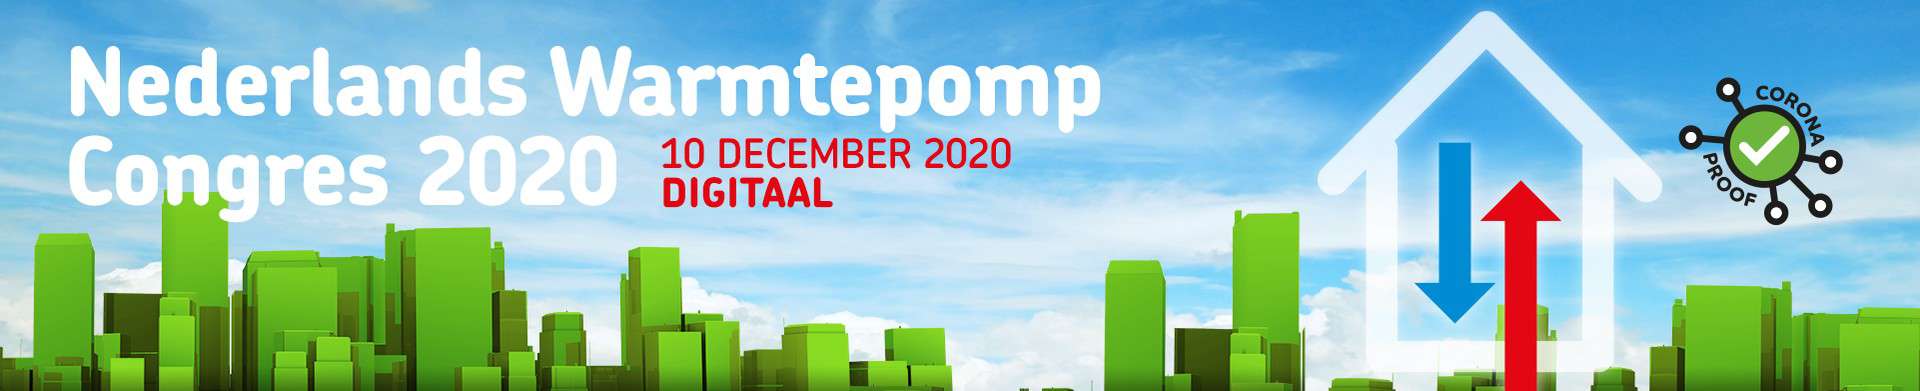 Warmtepompcongres 2020 logo